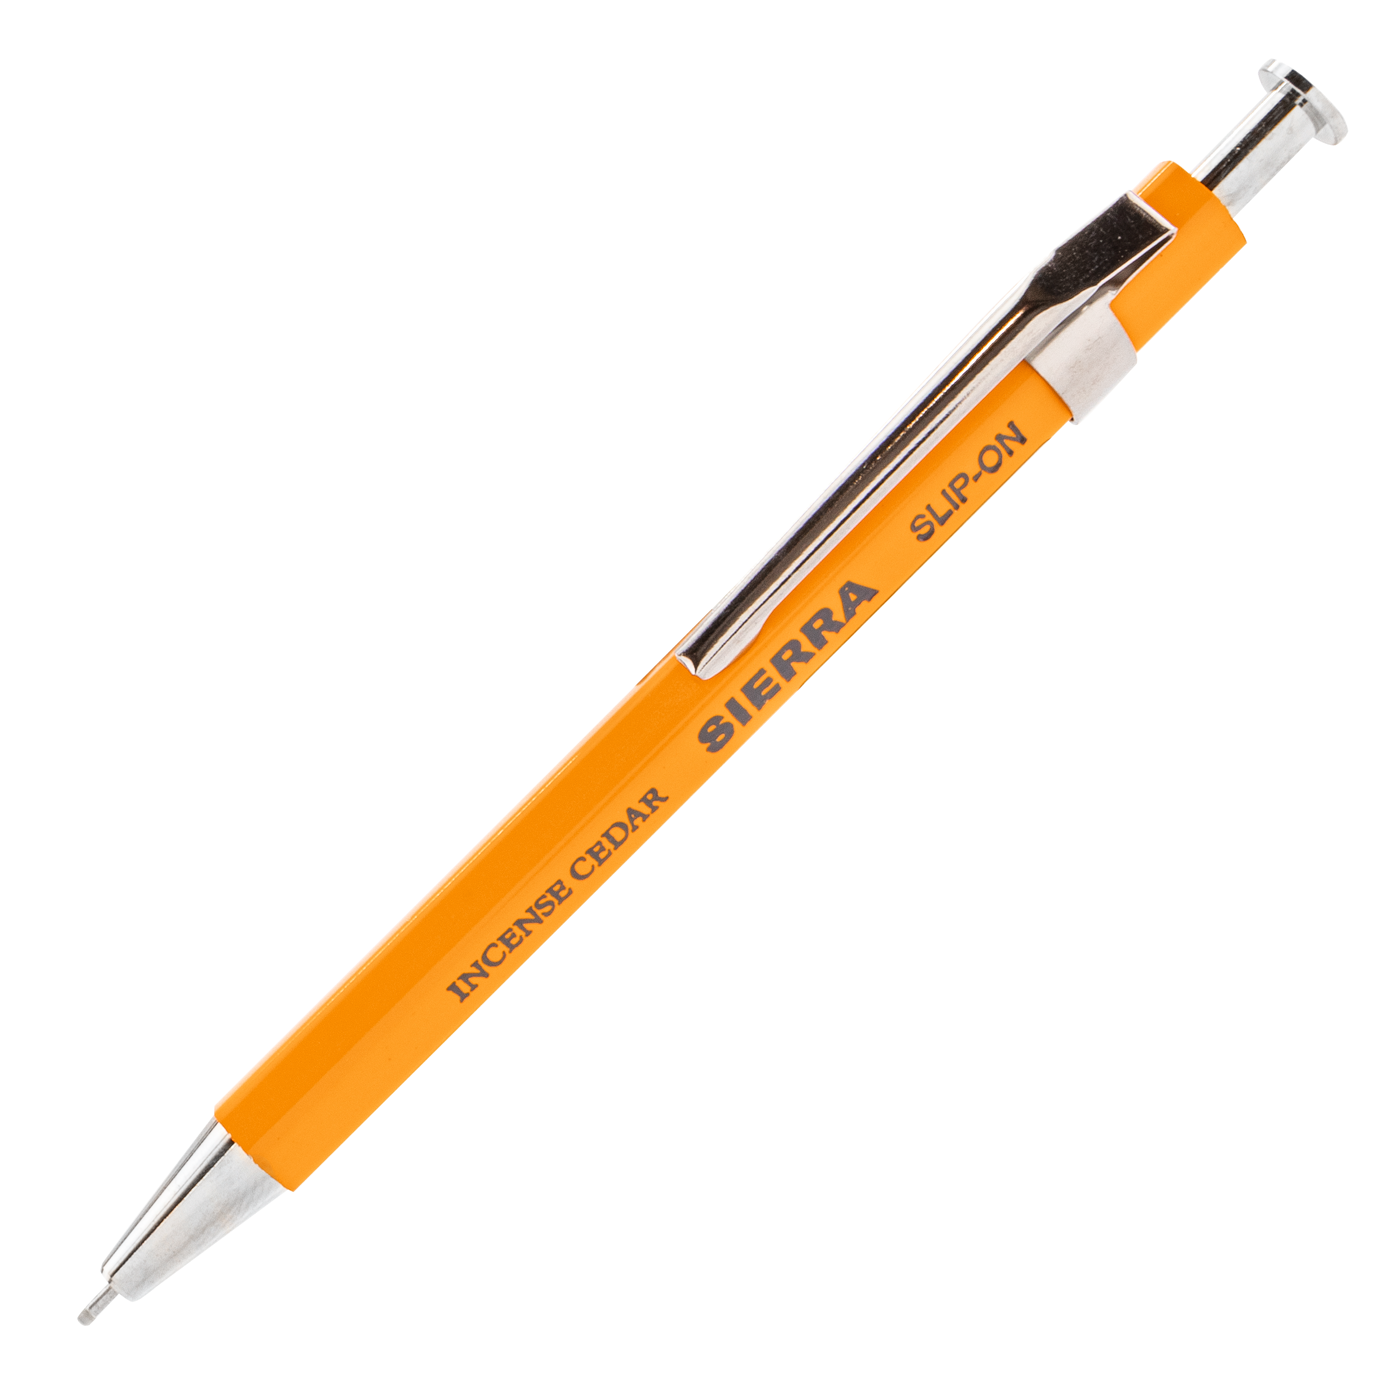 Slip-On Sierra Wooden Needle Point Pen